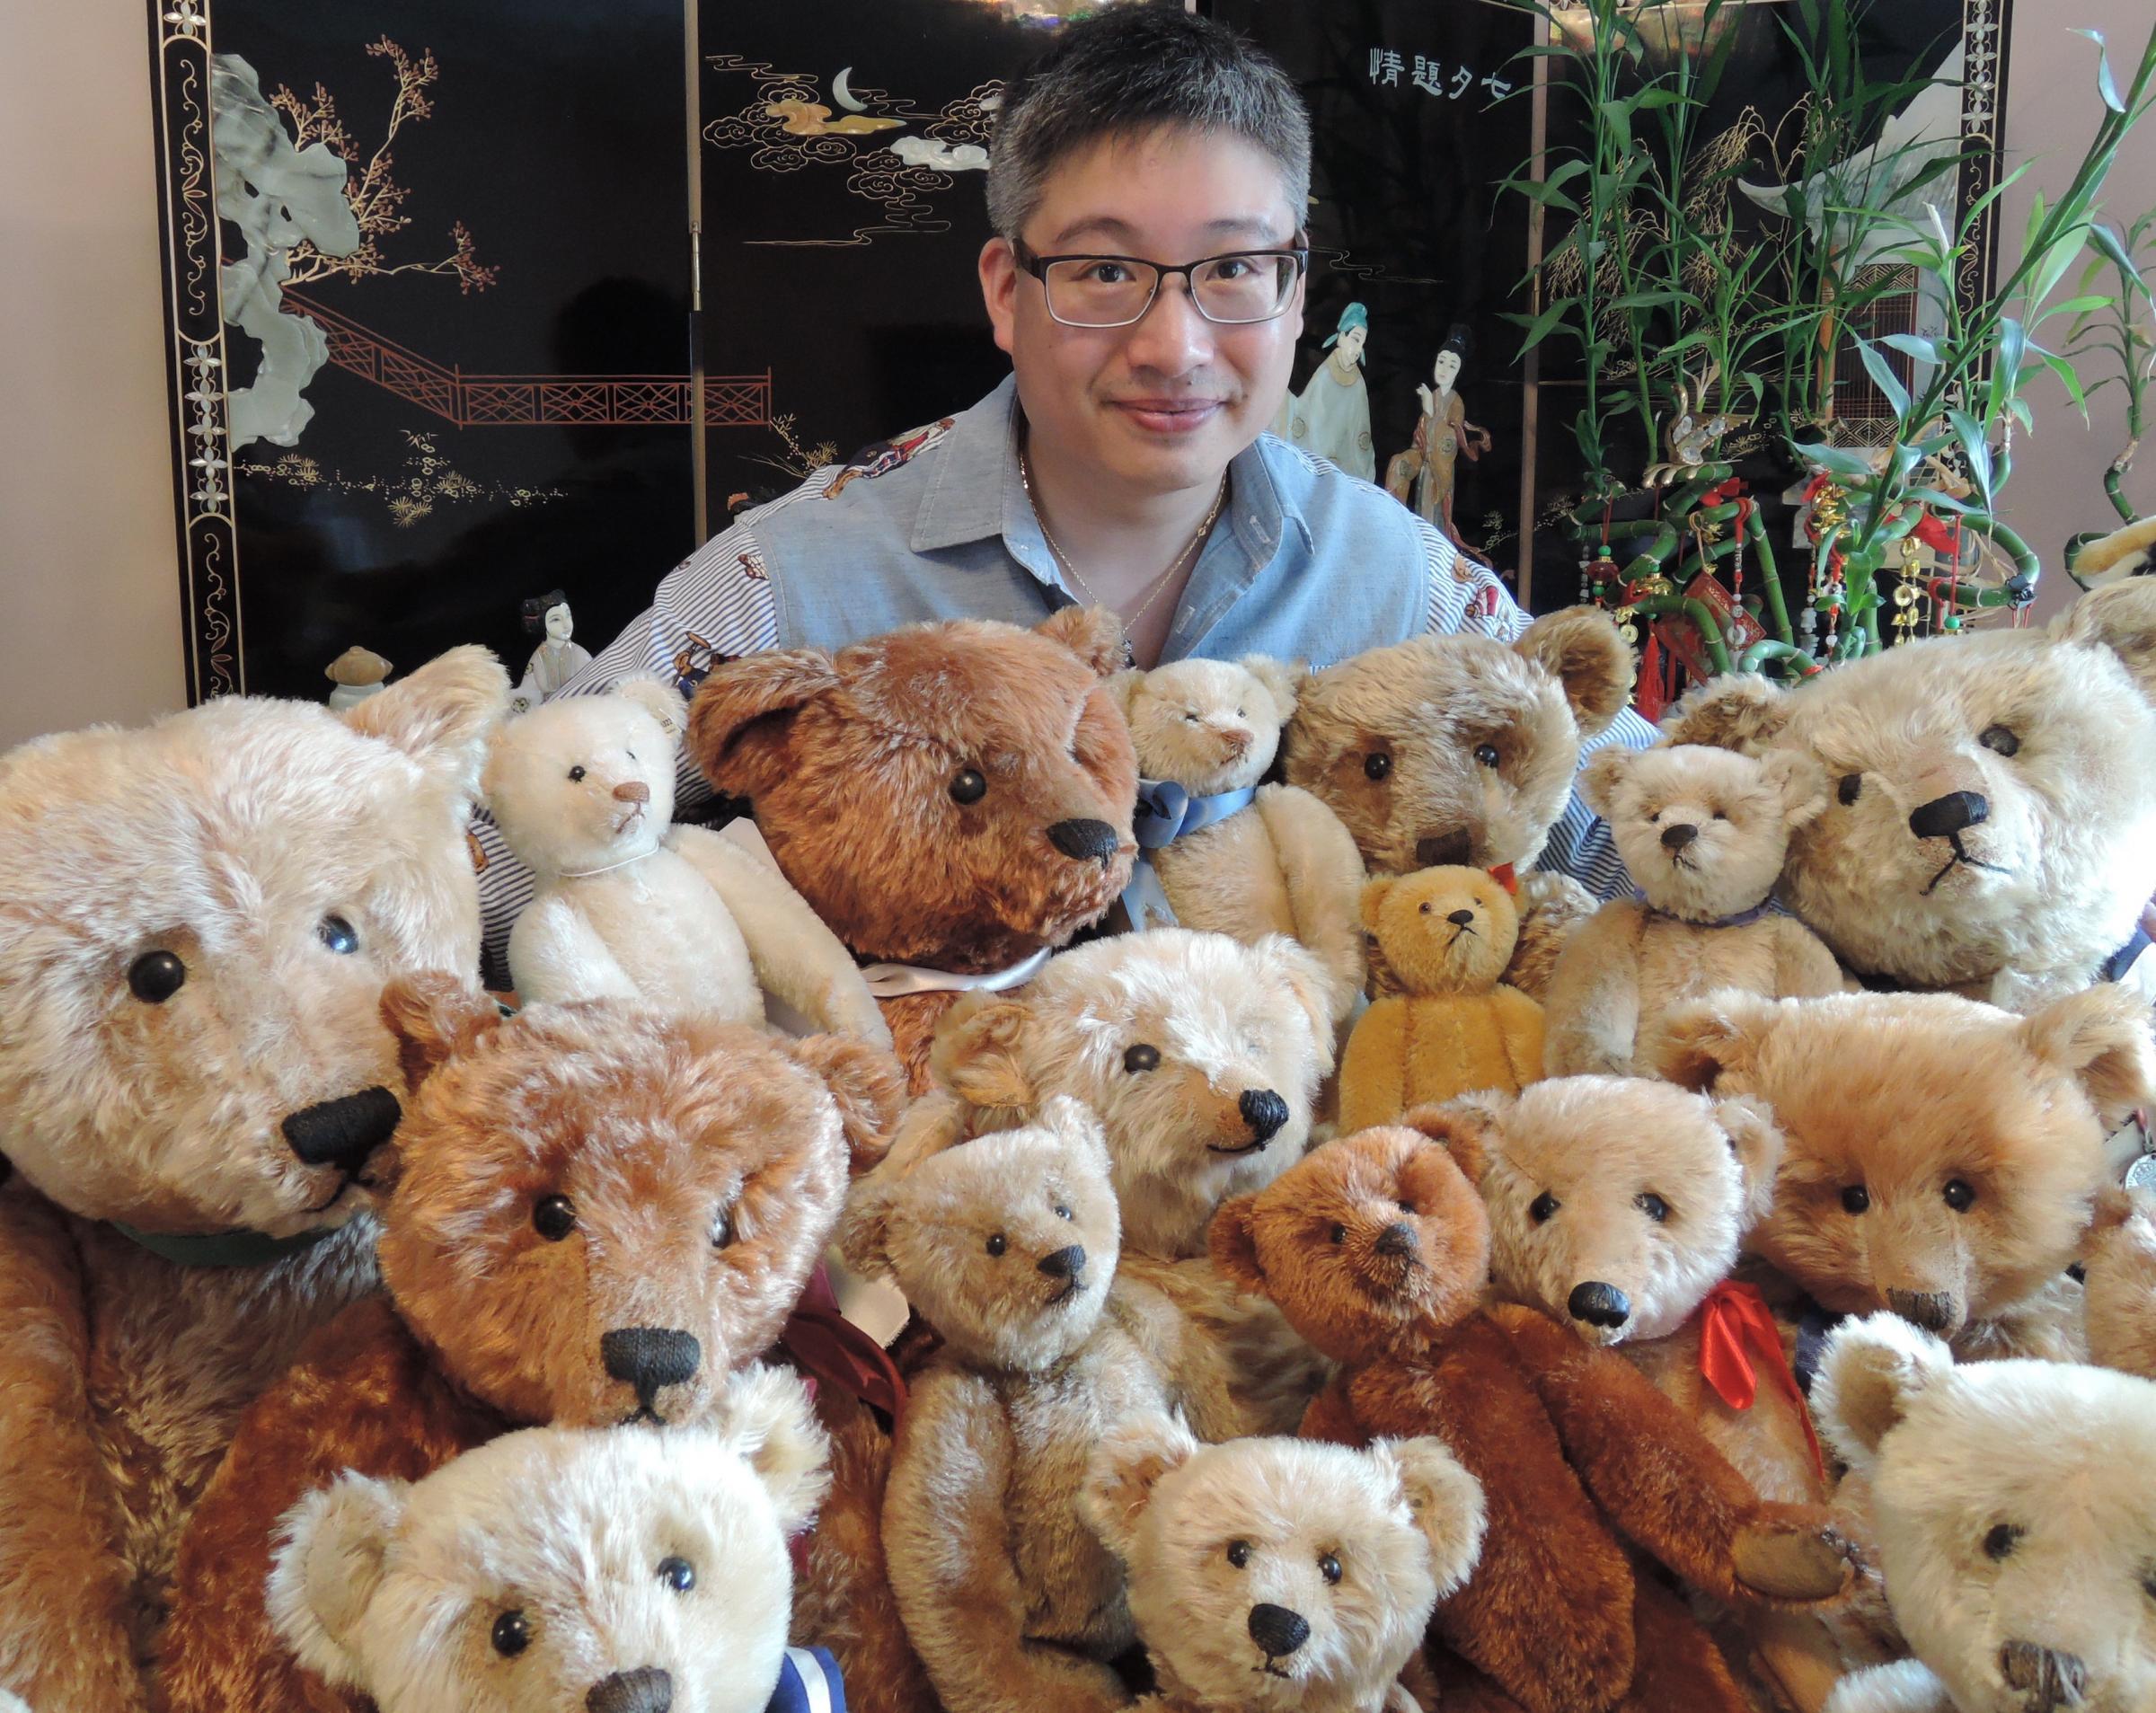 teddy bear collections